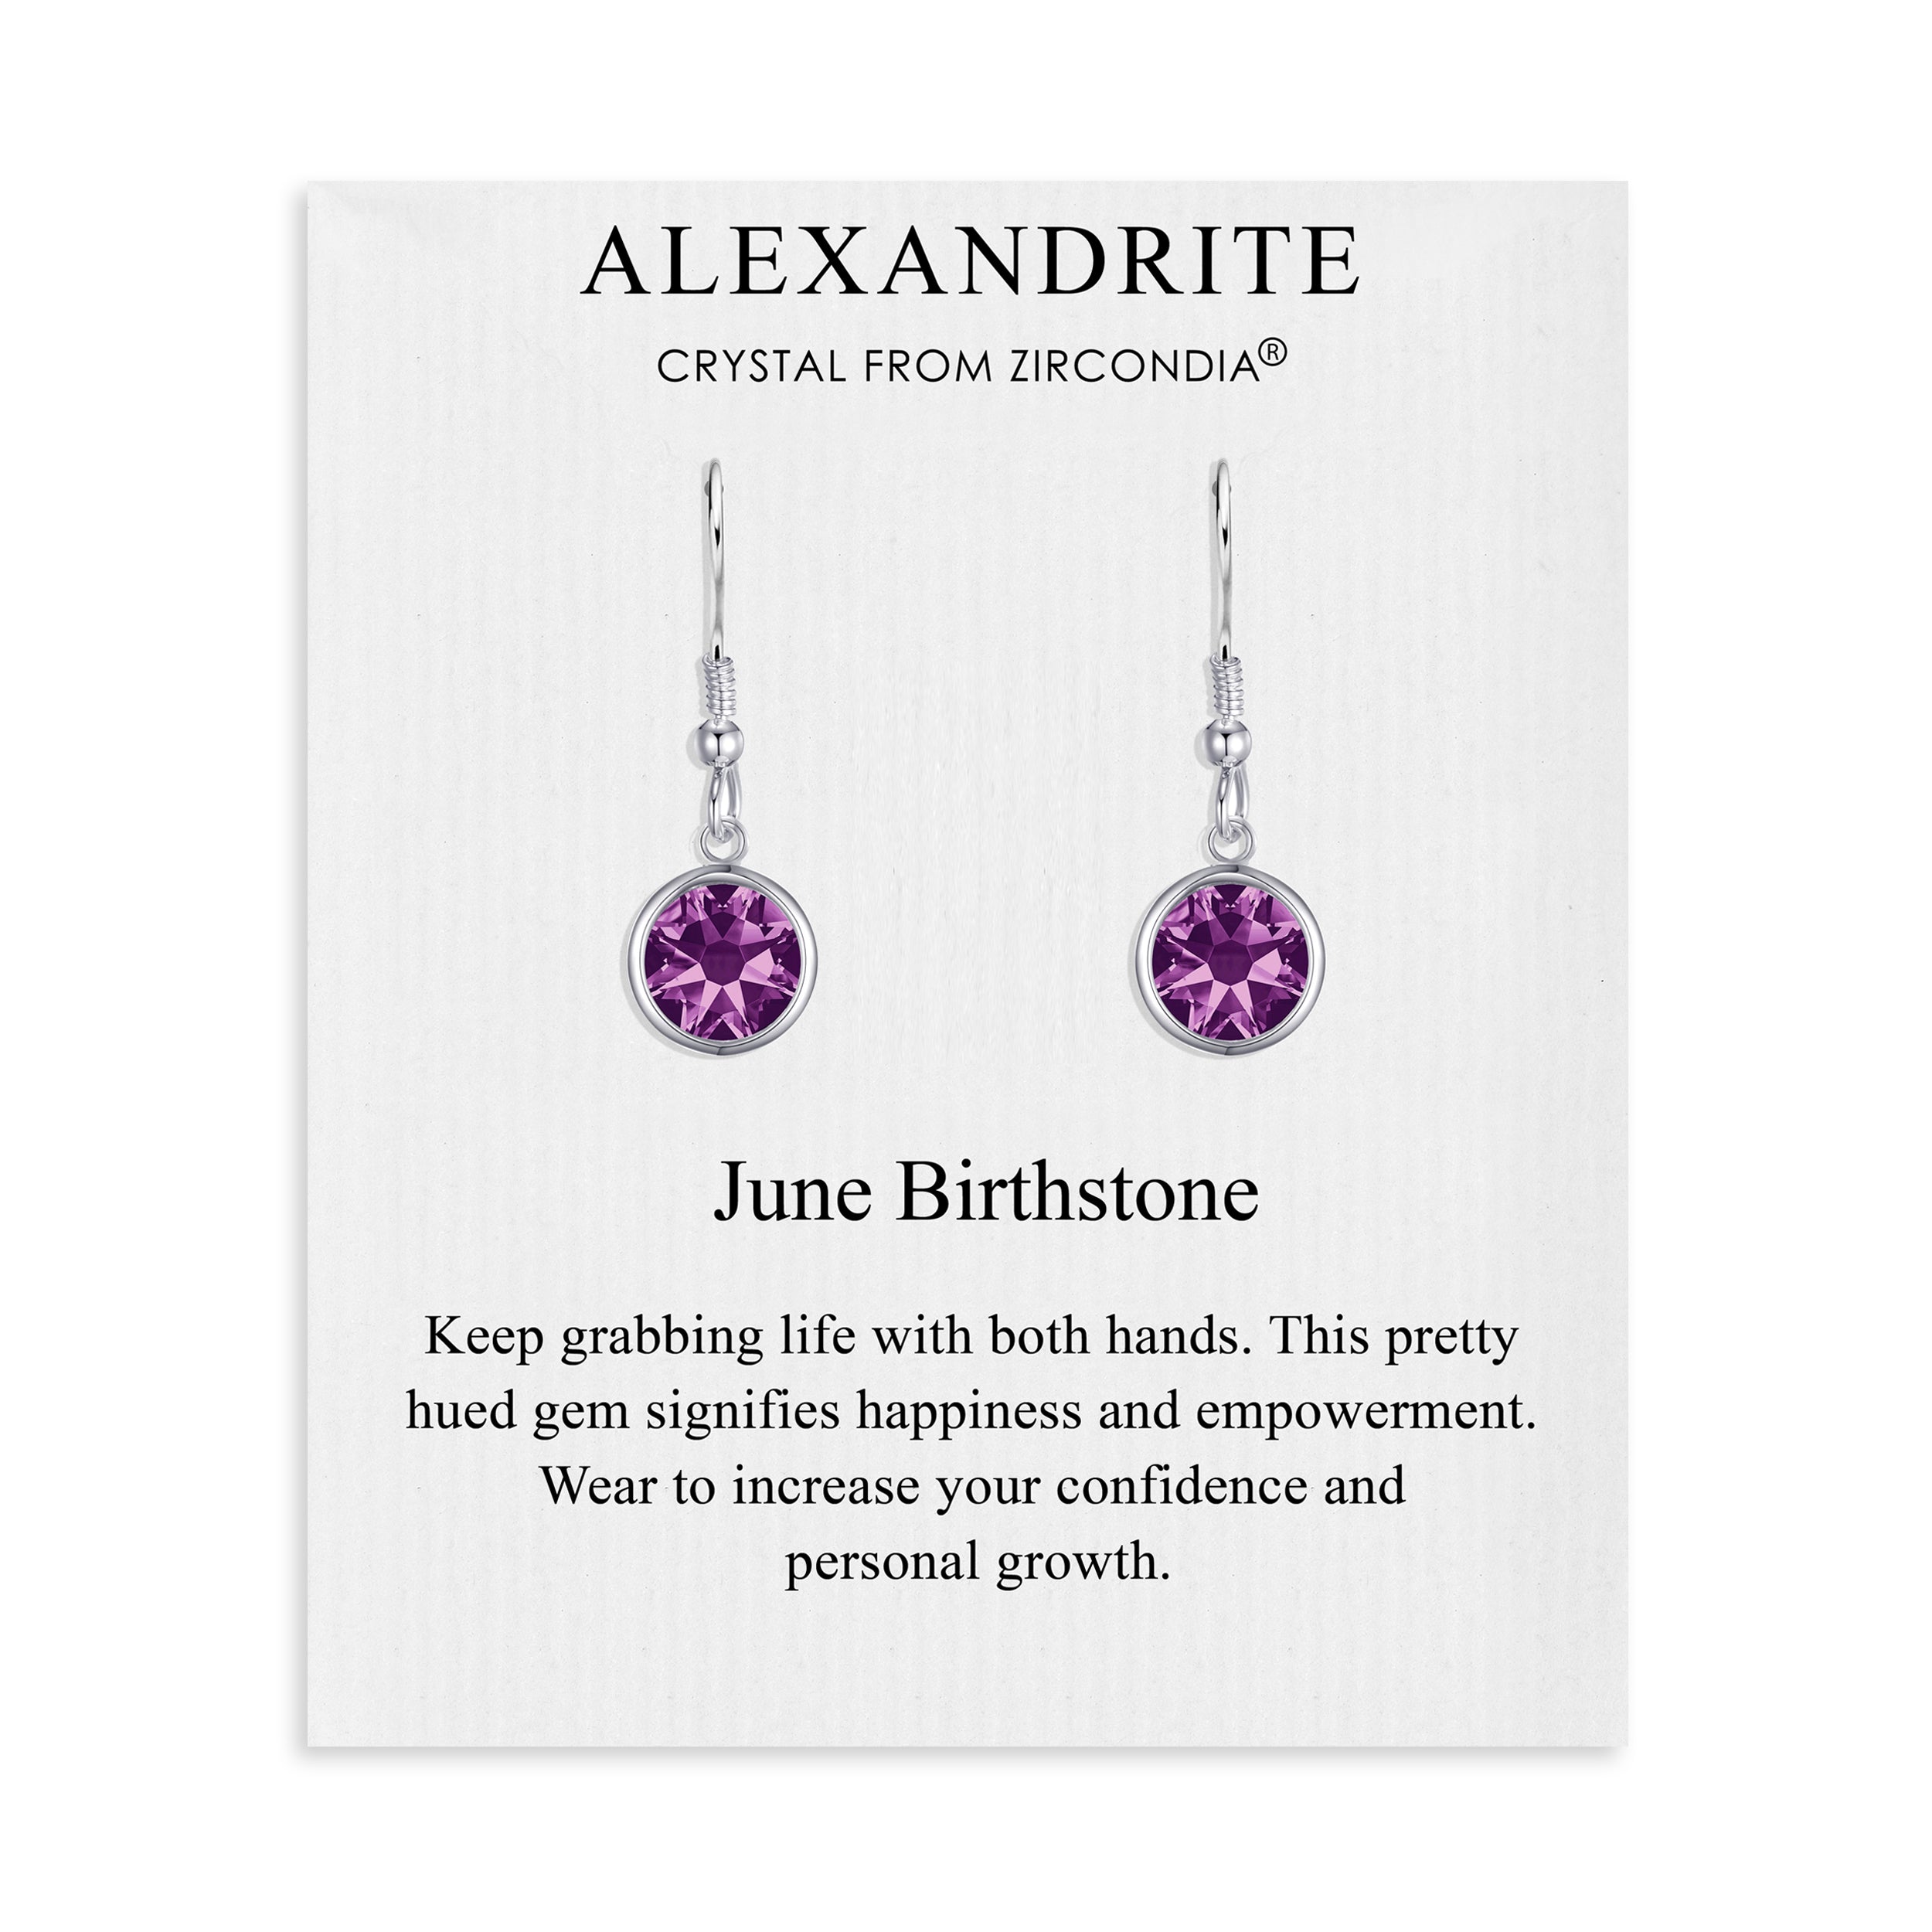 June Birthstone Drop Earrings Created with Alexandrite Zircondia® Crystals by Philip Jones Jewellery